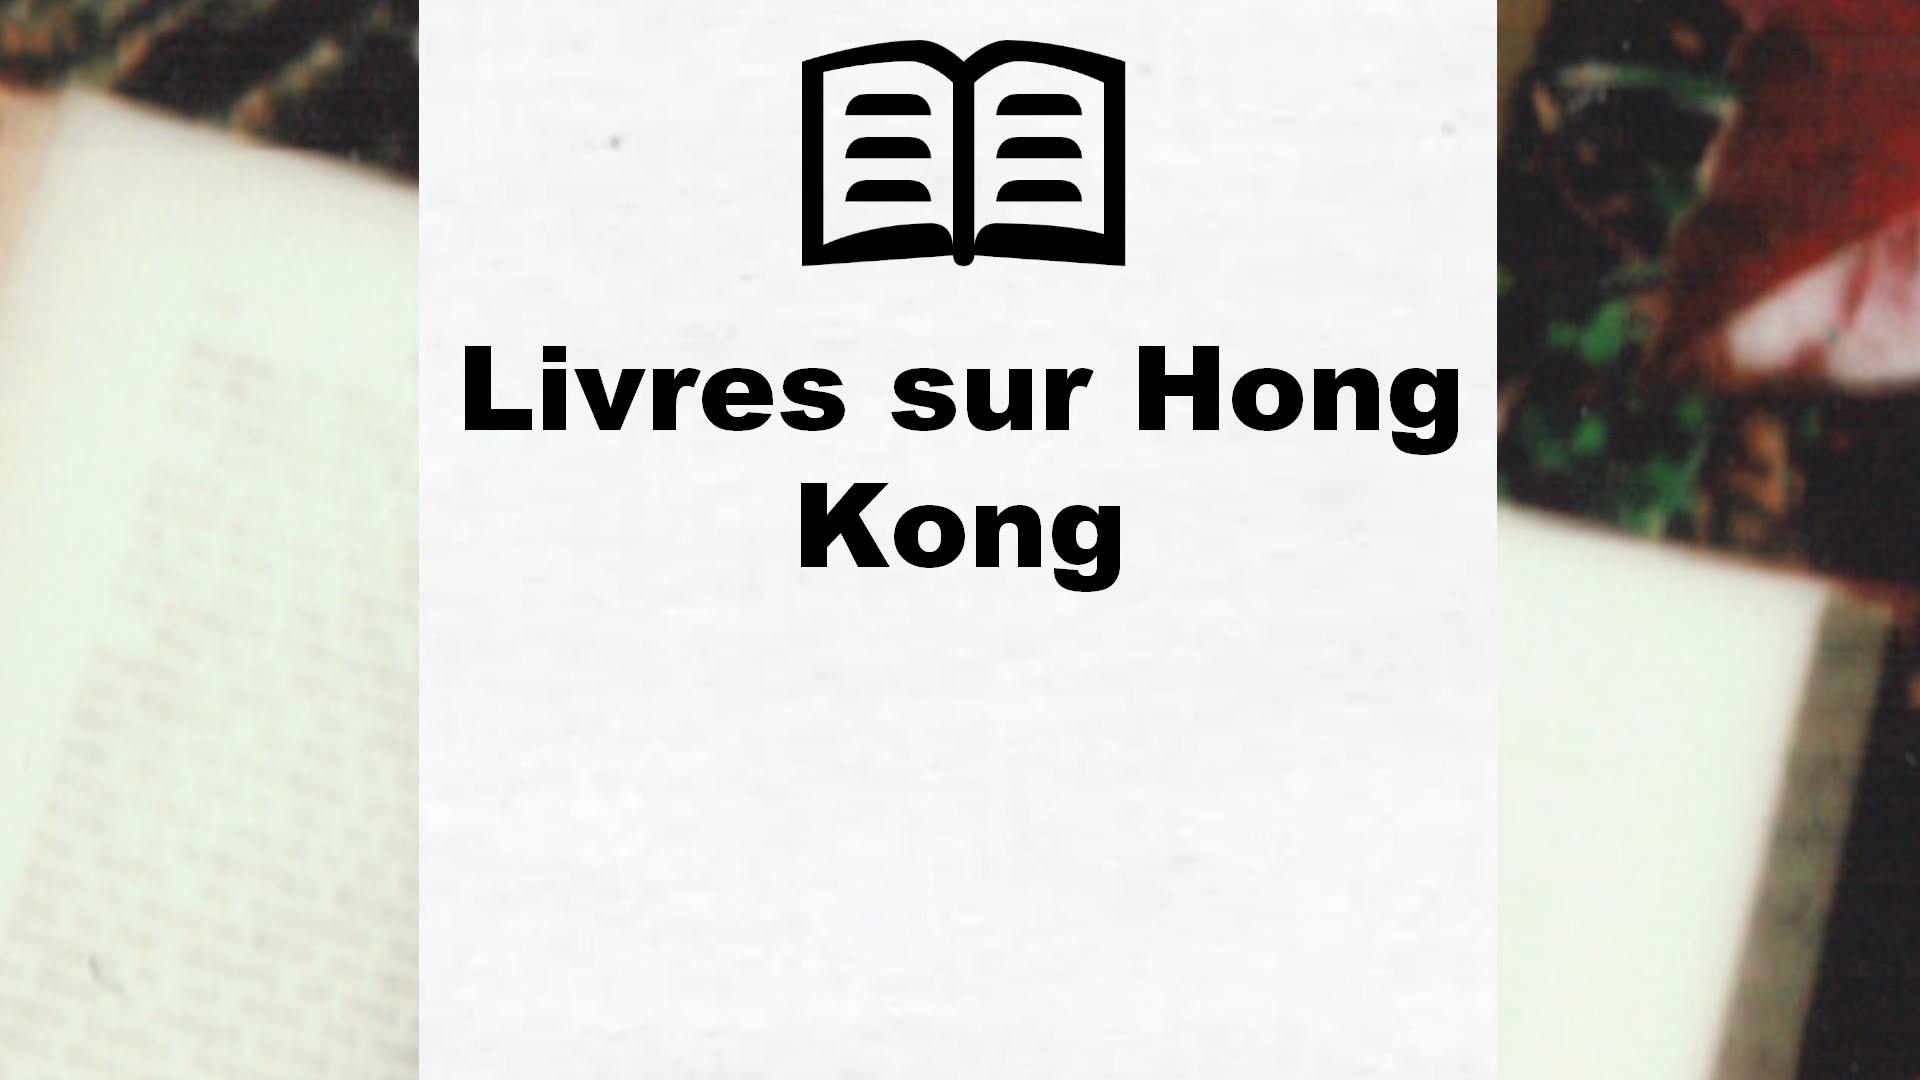 Livres sur Hong Kong